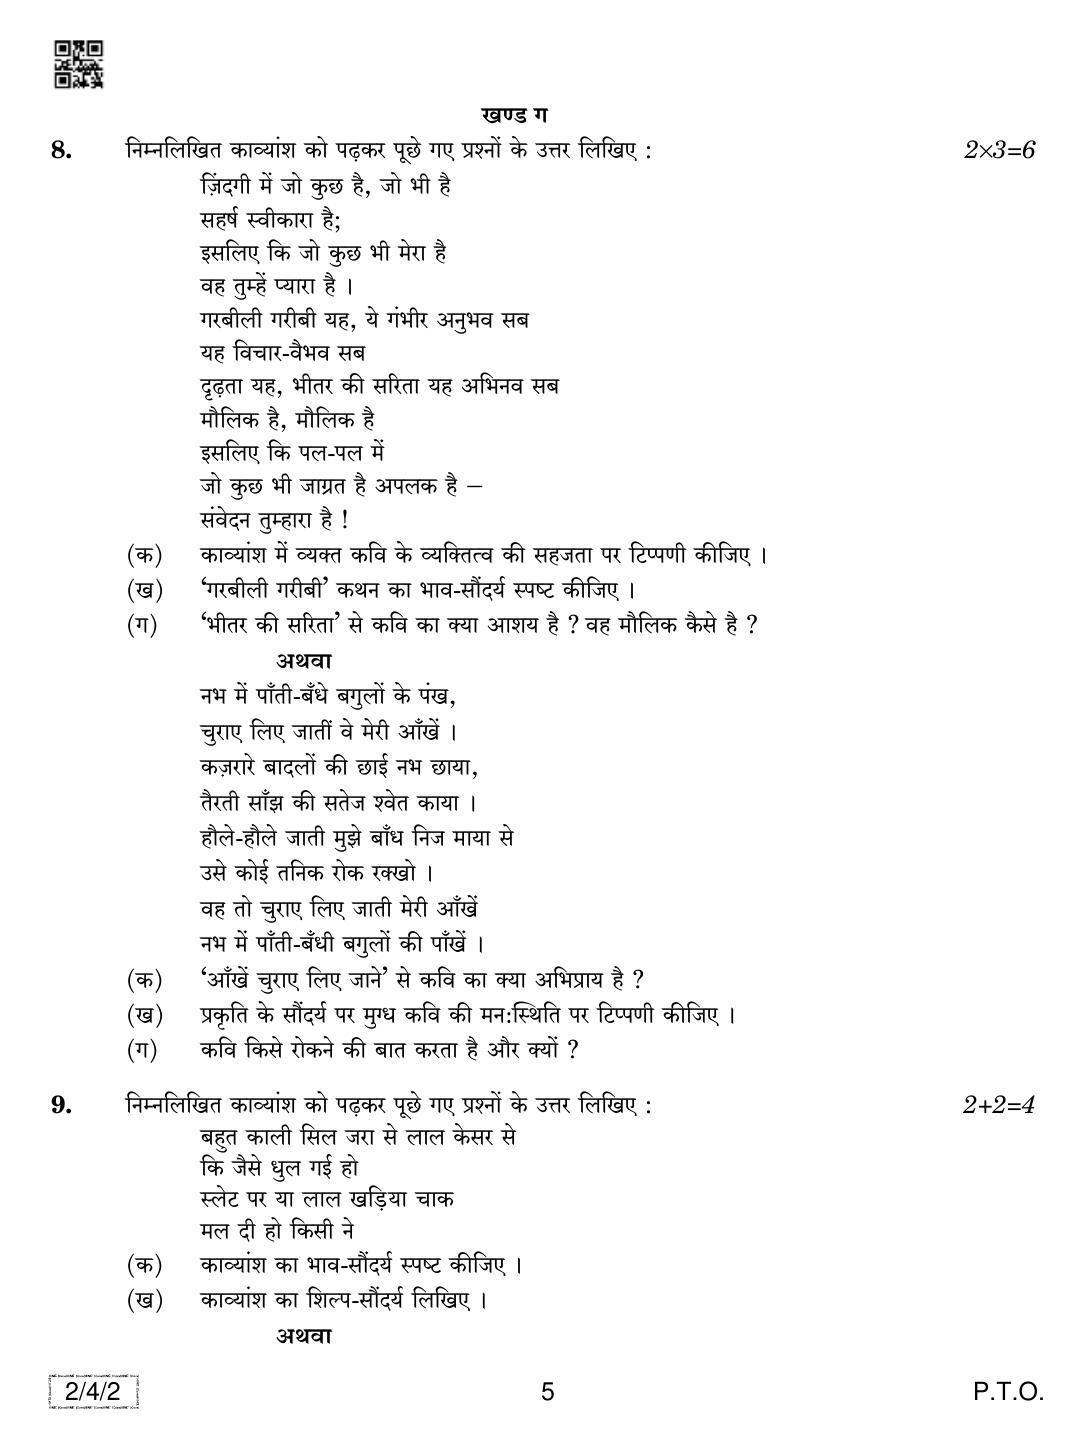 CBSE Class 12 2-4-2 Hindi Core 2019 Question Paper - Page 5